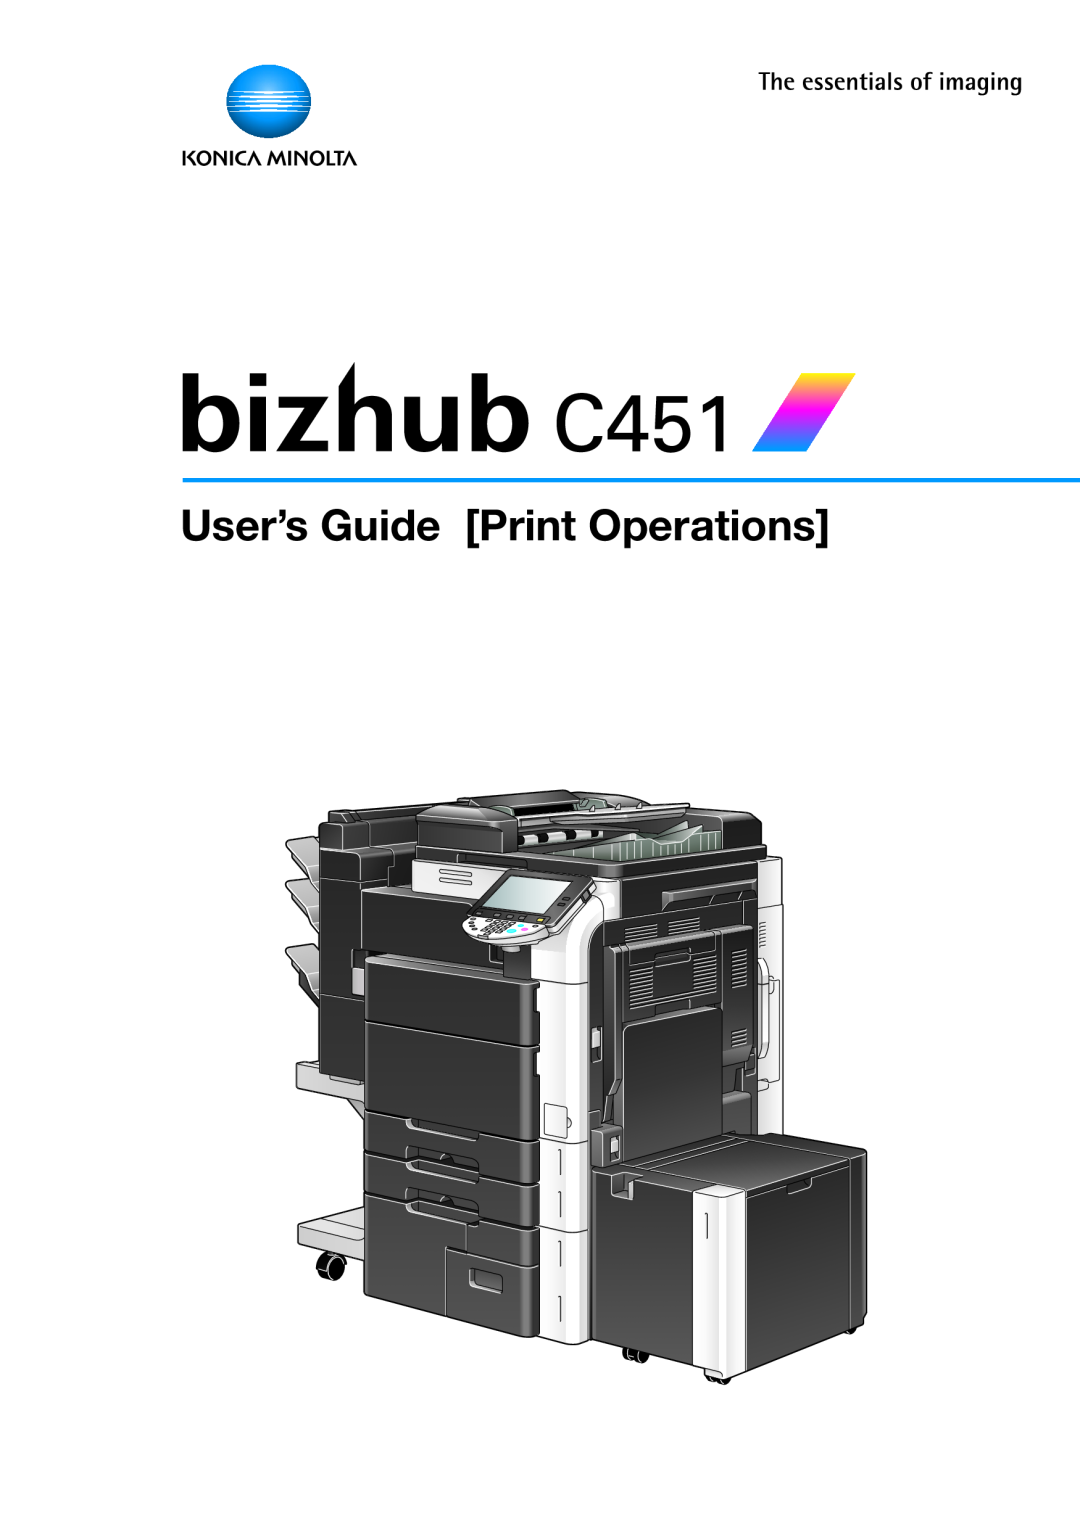 Konica Minolta C451 manual User’s Guide Print Operations 